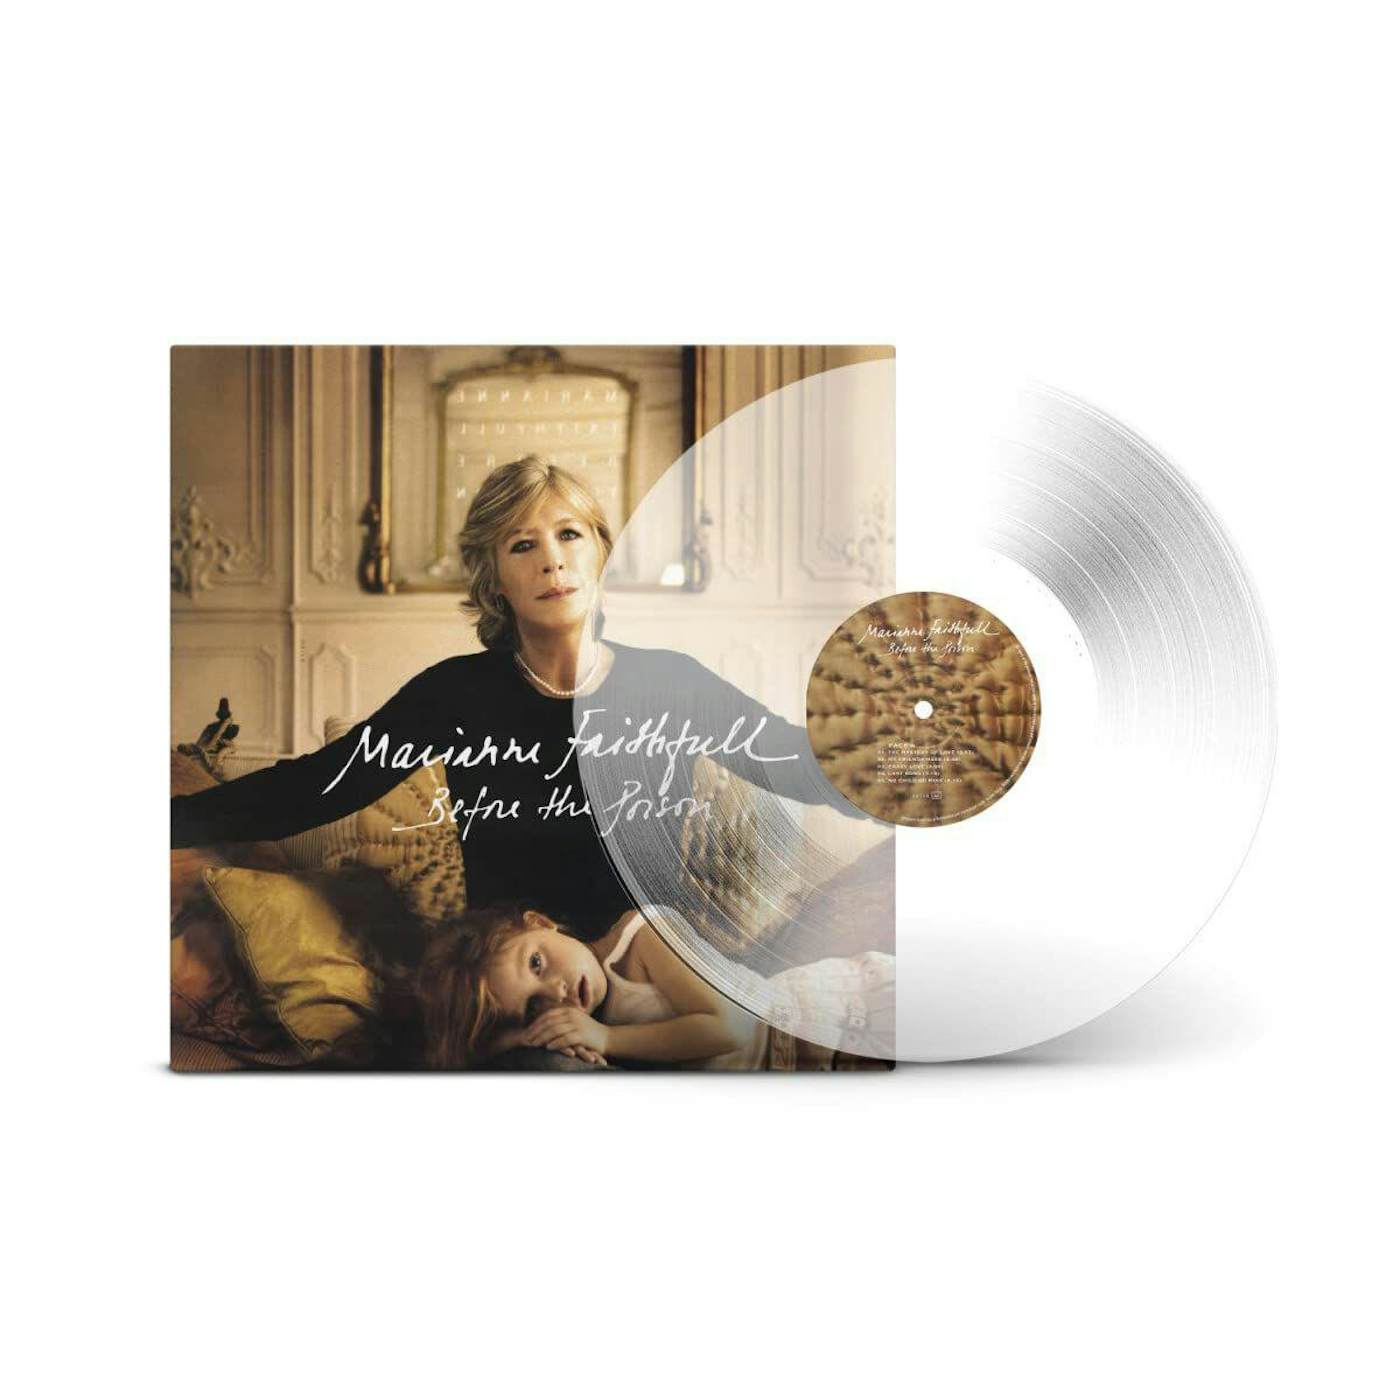 Marianne Faithfull Before The Poison (Clear) Vinyl Record